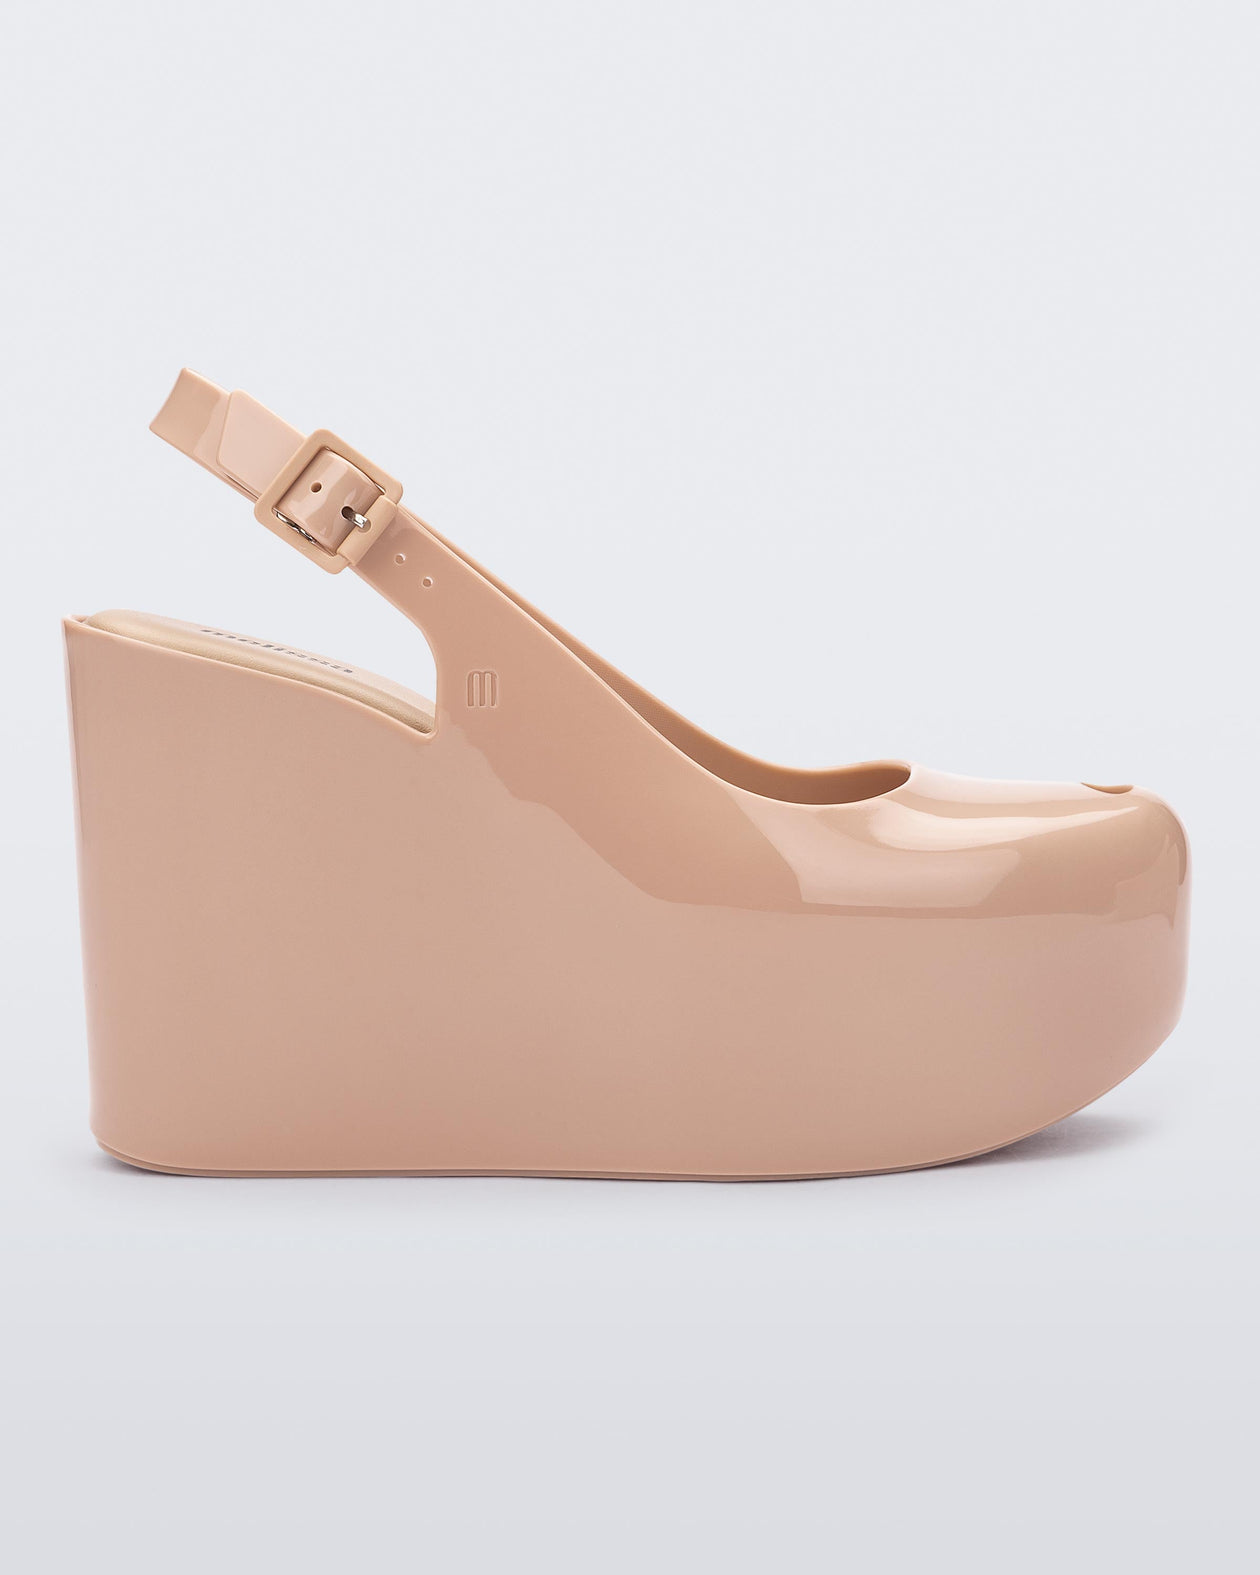 Side view of a beige Melissa Groovy wedge platform slingback heel with peep toe. 